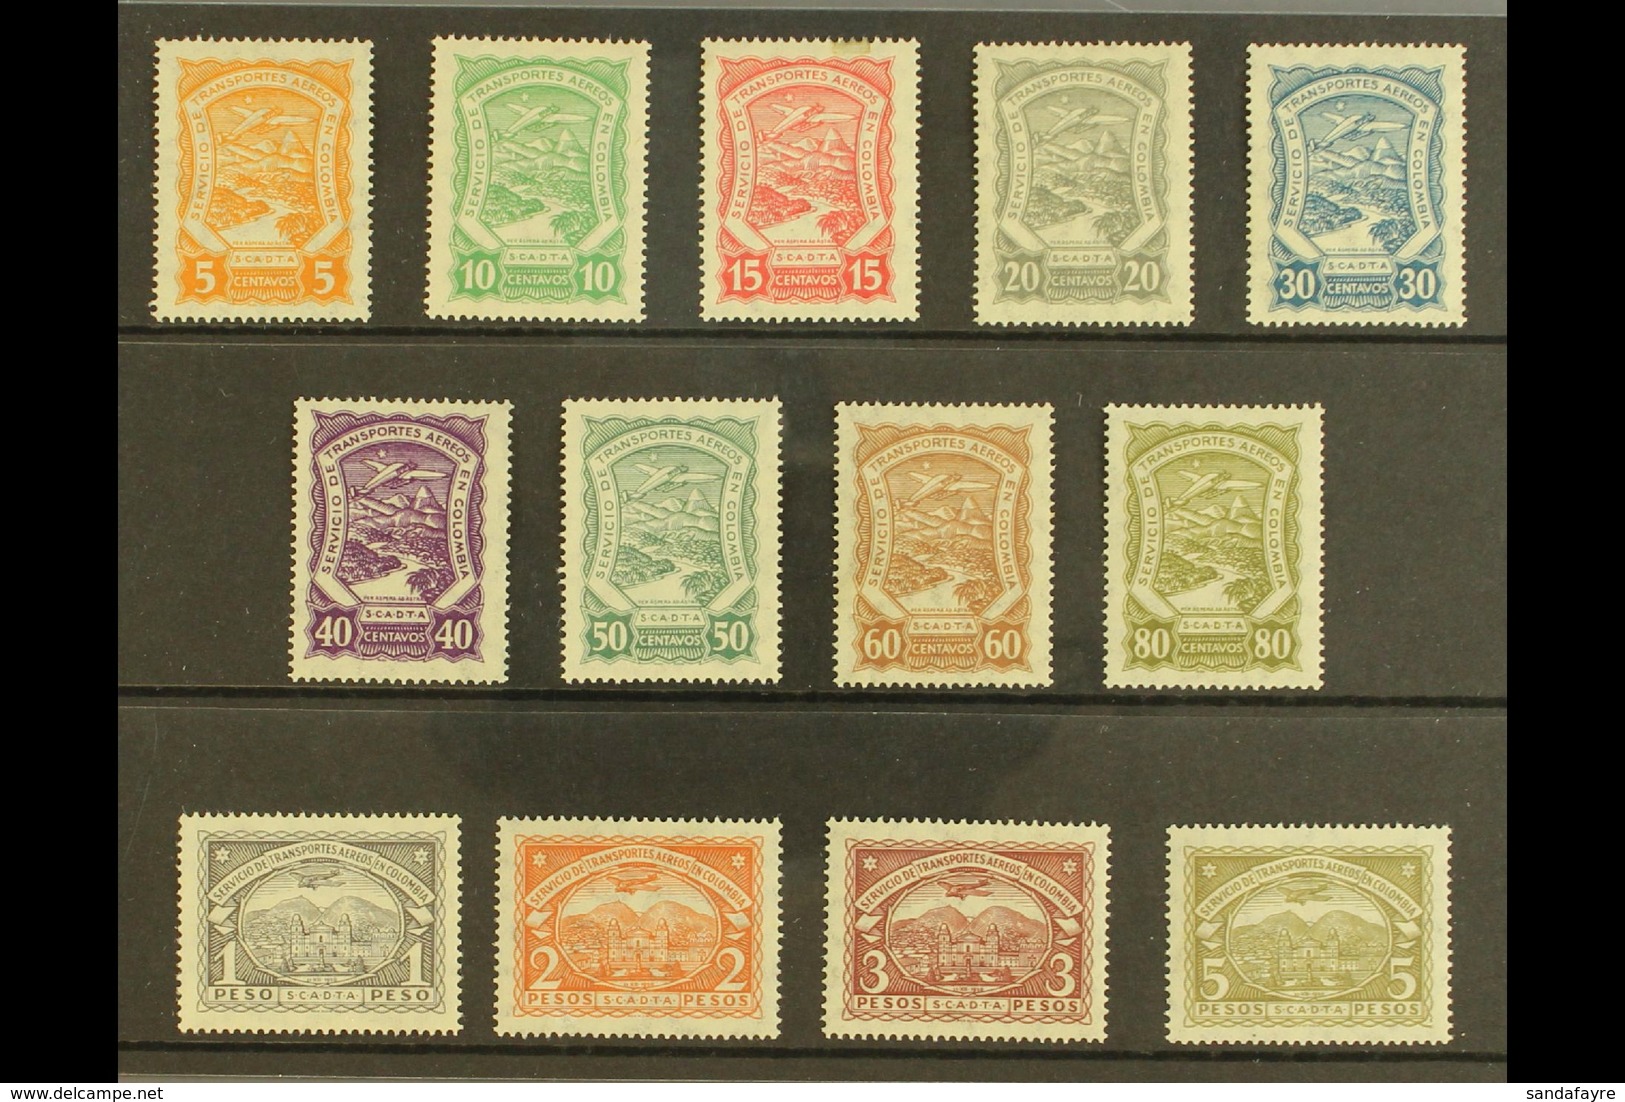 PRIVATE AIRS - SCADTA  1923-28 Complete Set, Scott C38/50 (SG 37/49, Michel 29/39 & 43/44), Never Hinged Mint, The 15c W - Kolumbien